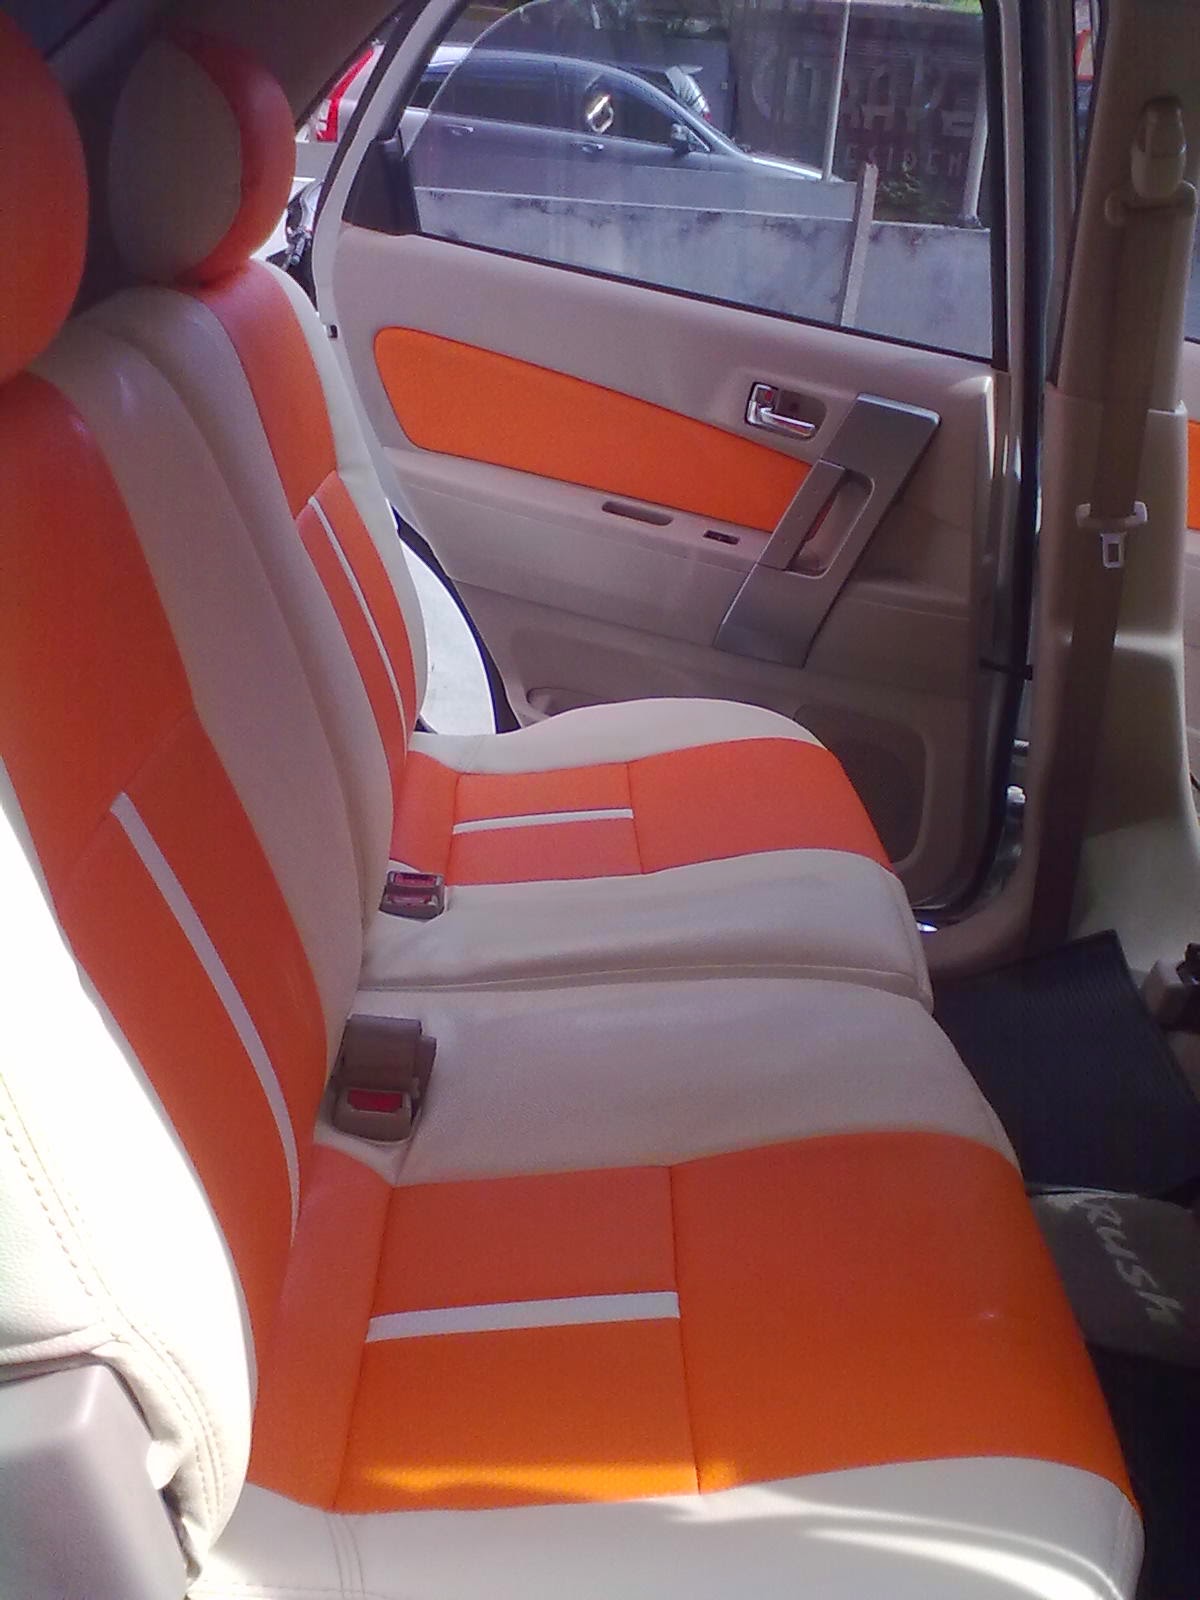 Sarung Jok Mobil Rush Cream Orange Off White Medan Jok Mobil